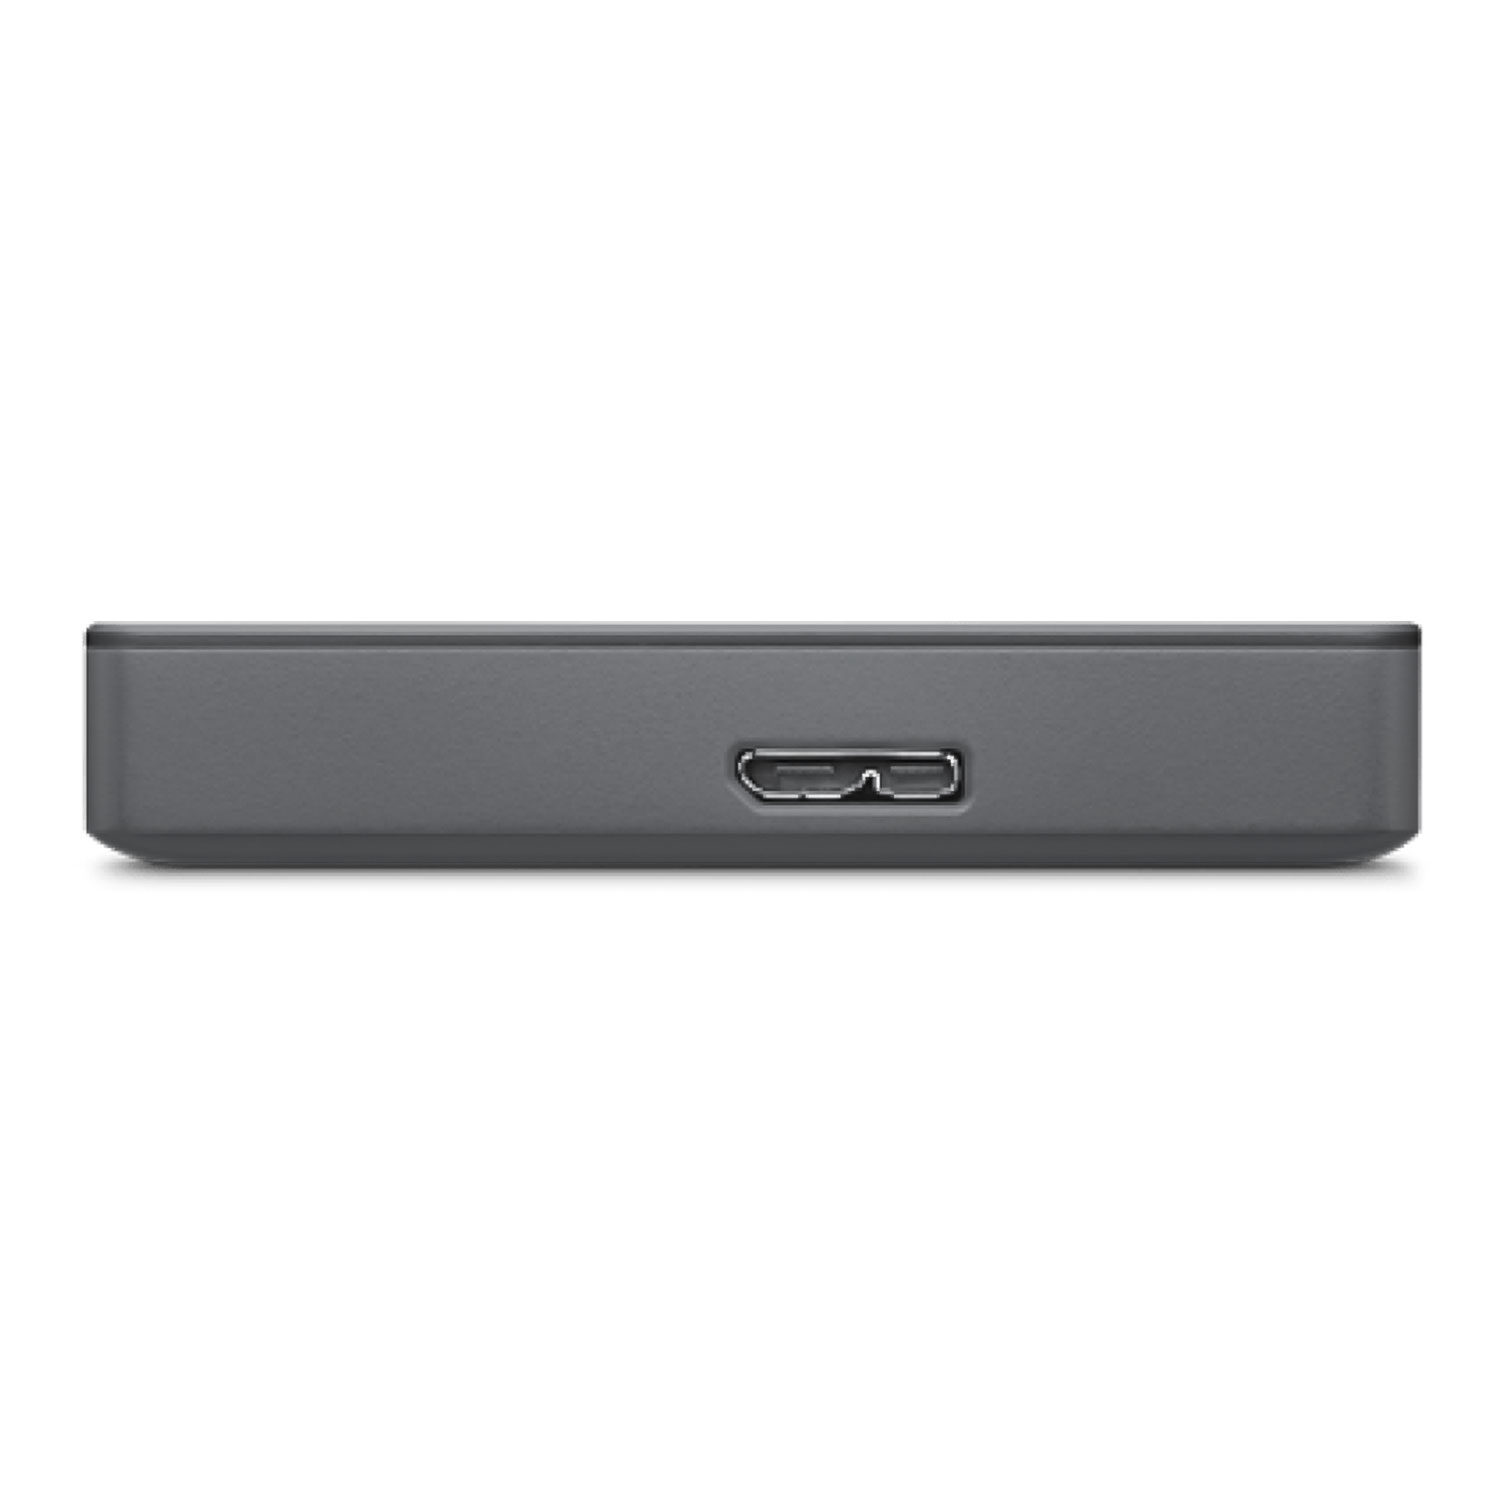 HD Externo Portátil Seagate Expansion 5TB 2.5" USB 3.0 - STSTGX5000400